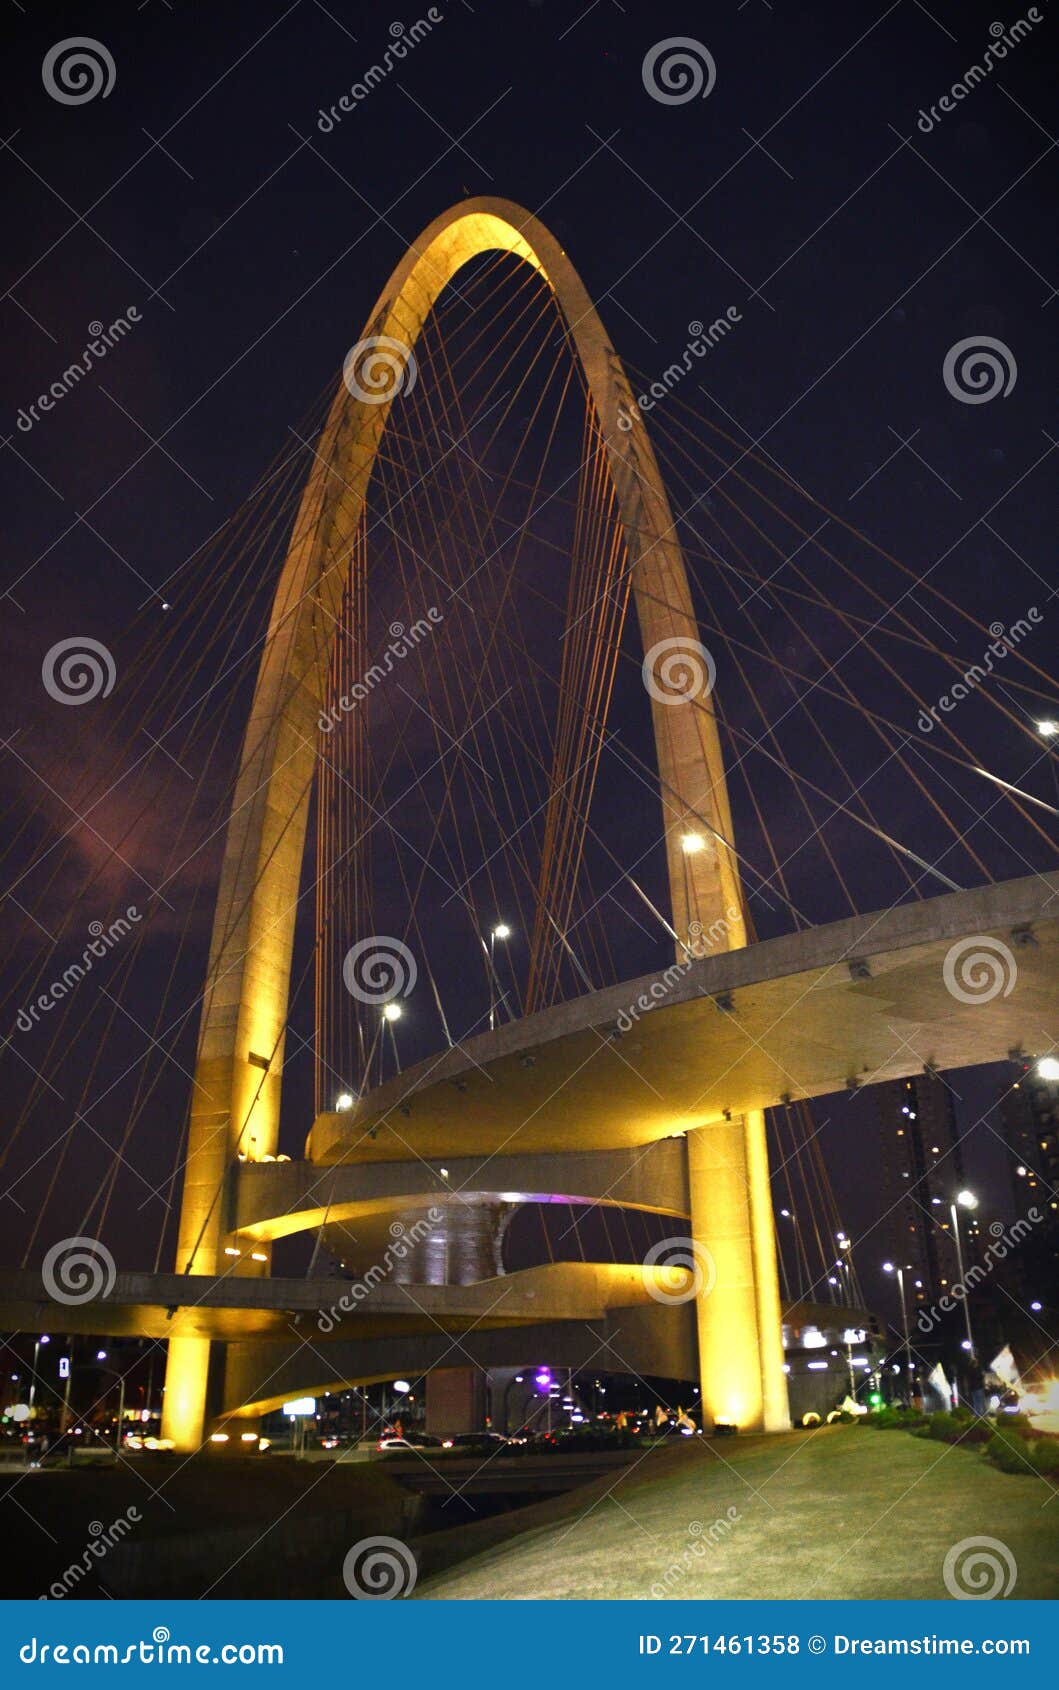 the beautiful scenic illumination of the innovation arch at night